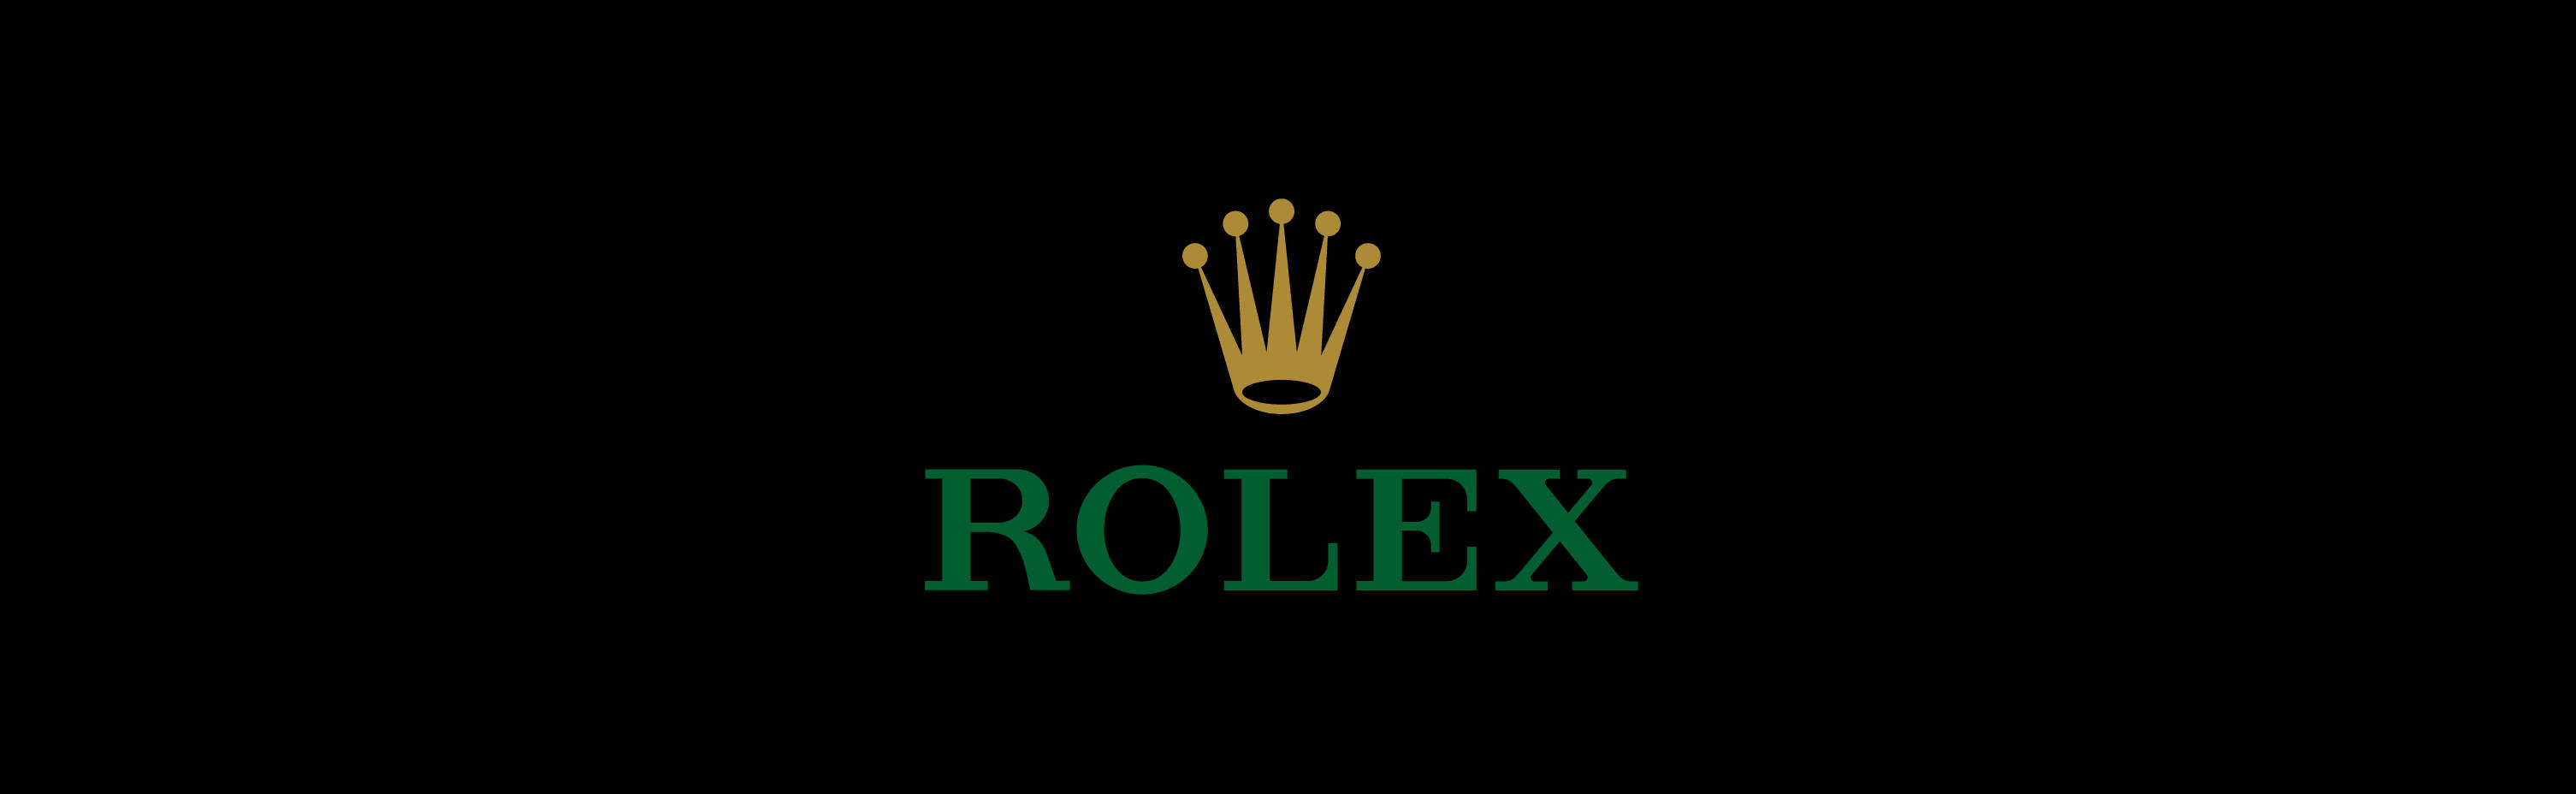 Iconoicónico Verde De Rolex Fondo de pantalla